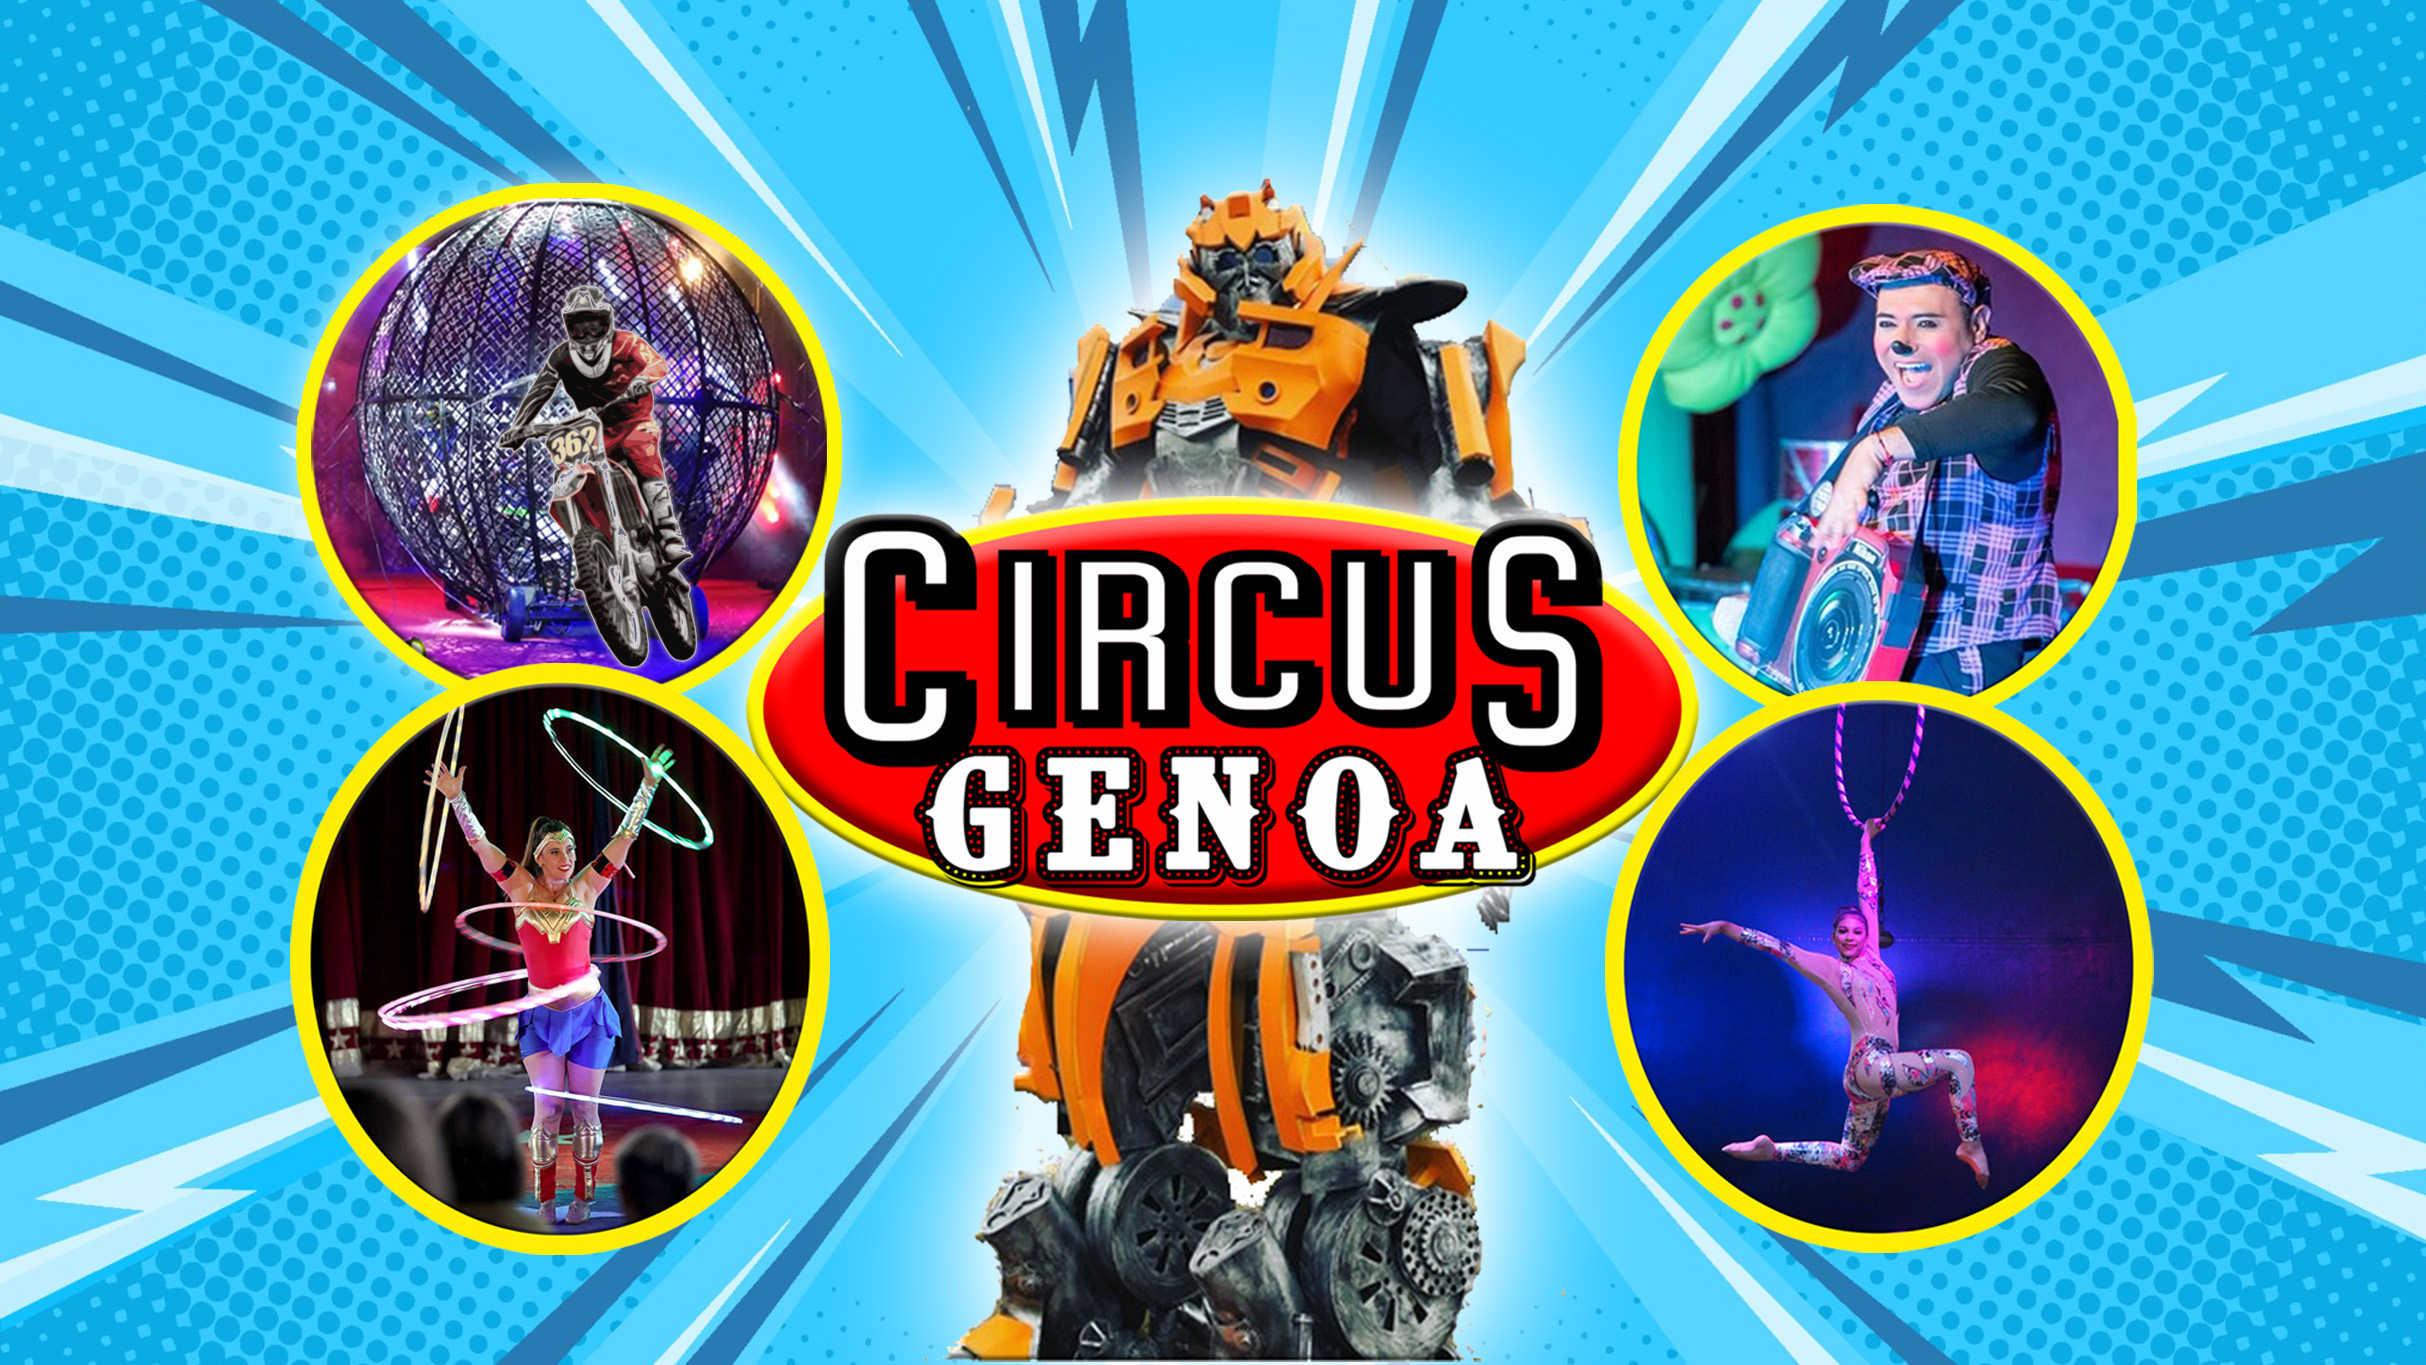 Circus Genoa | FORT SASKATCHEWAN, ALBERTA (May 12)